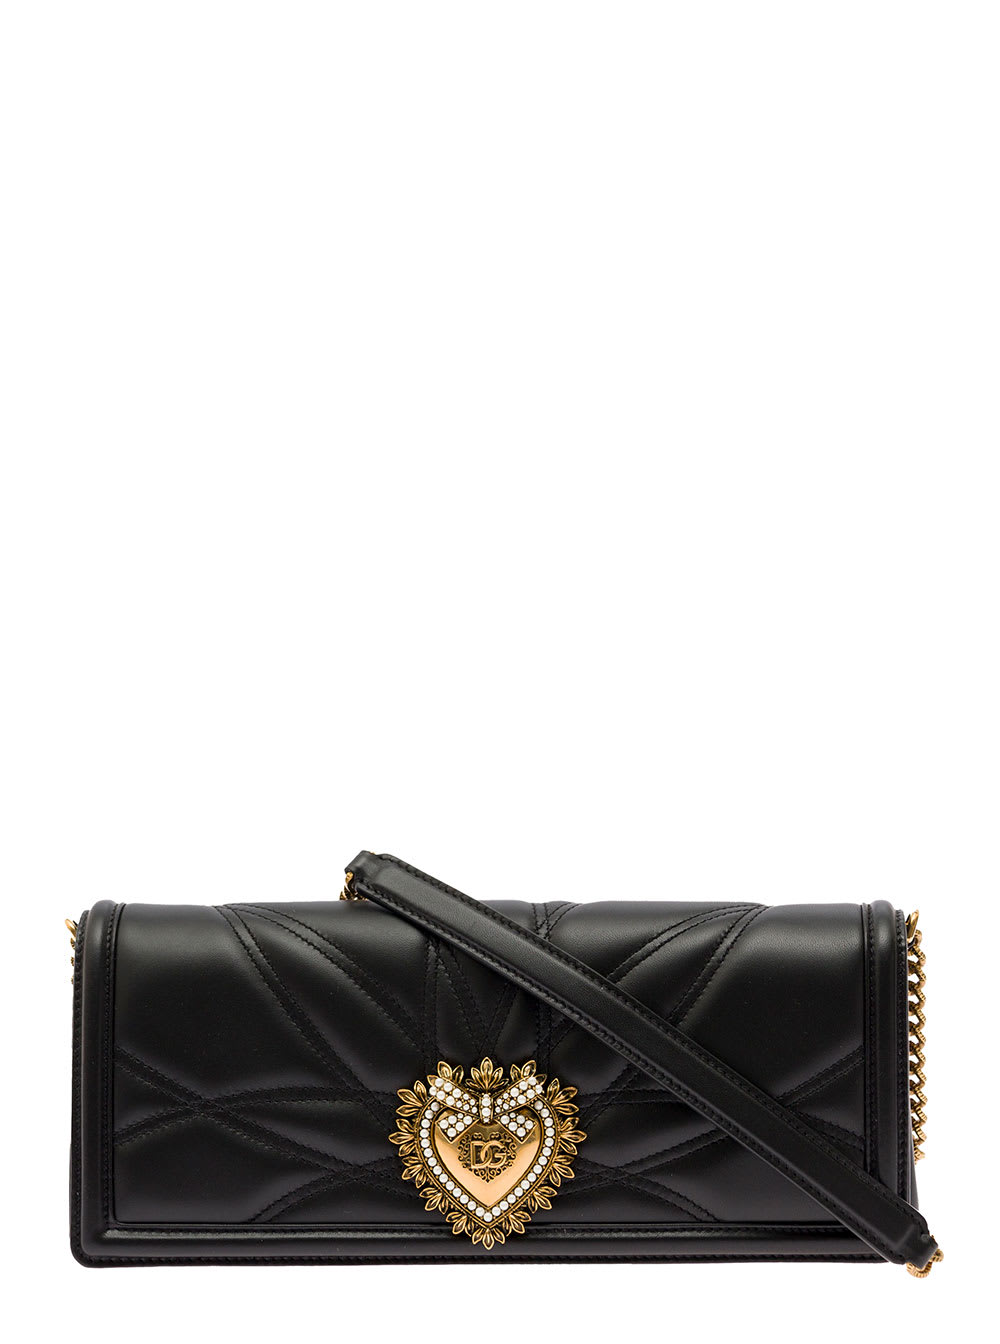 Dolce & Gabbana Devotion Black Shoulder Bag With Jewel Heart Detail In Matelassé Leather Woman